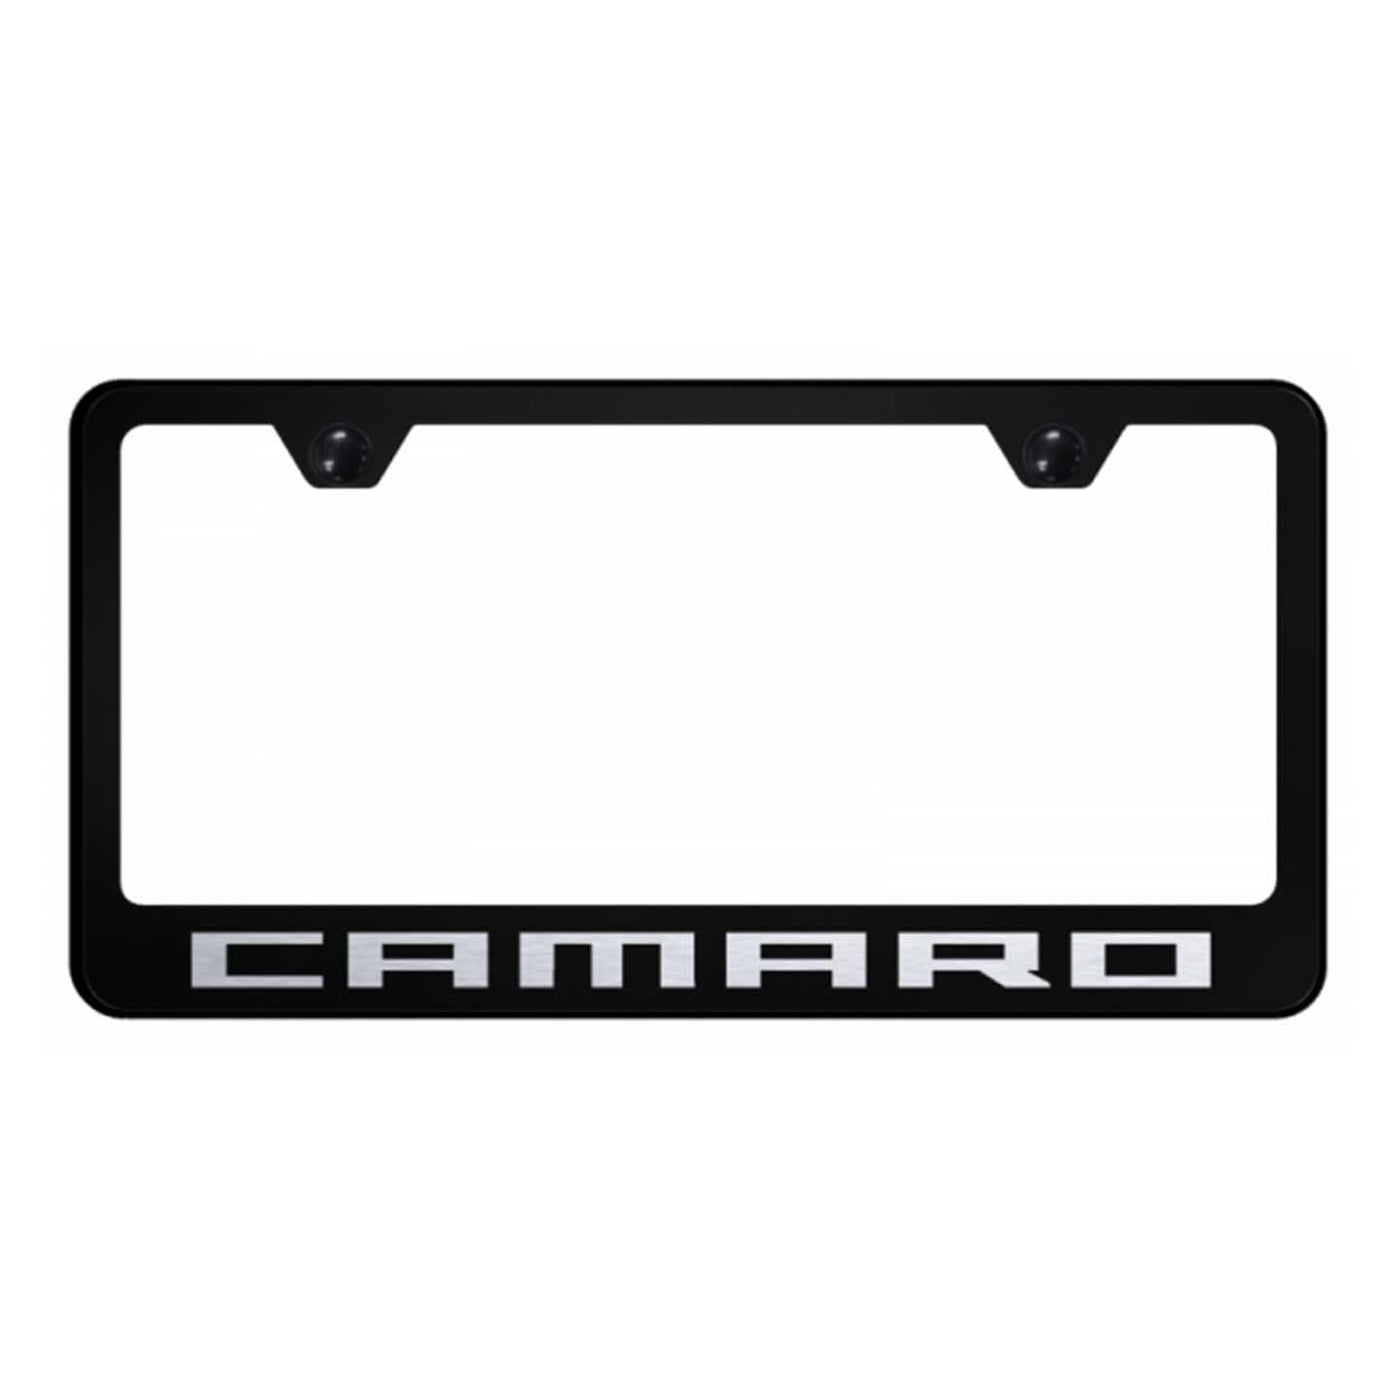 Camaro Stainless Steel Frame - Laser Etched Black